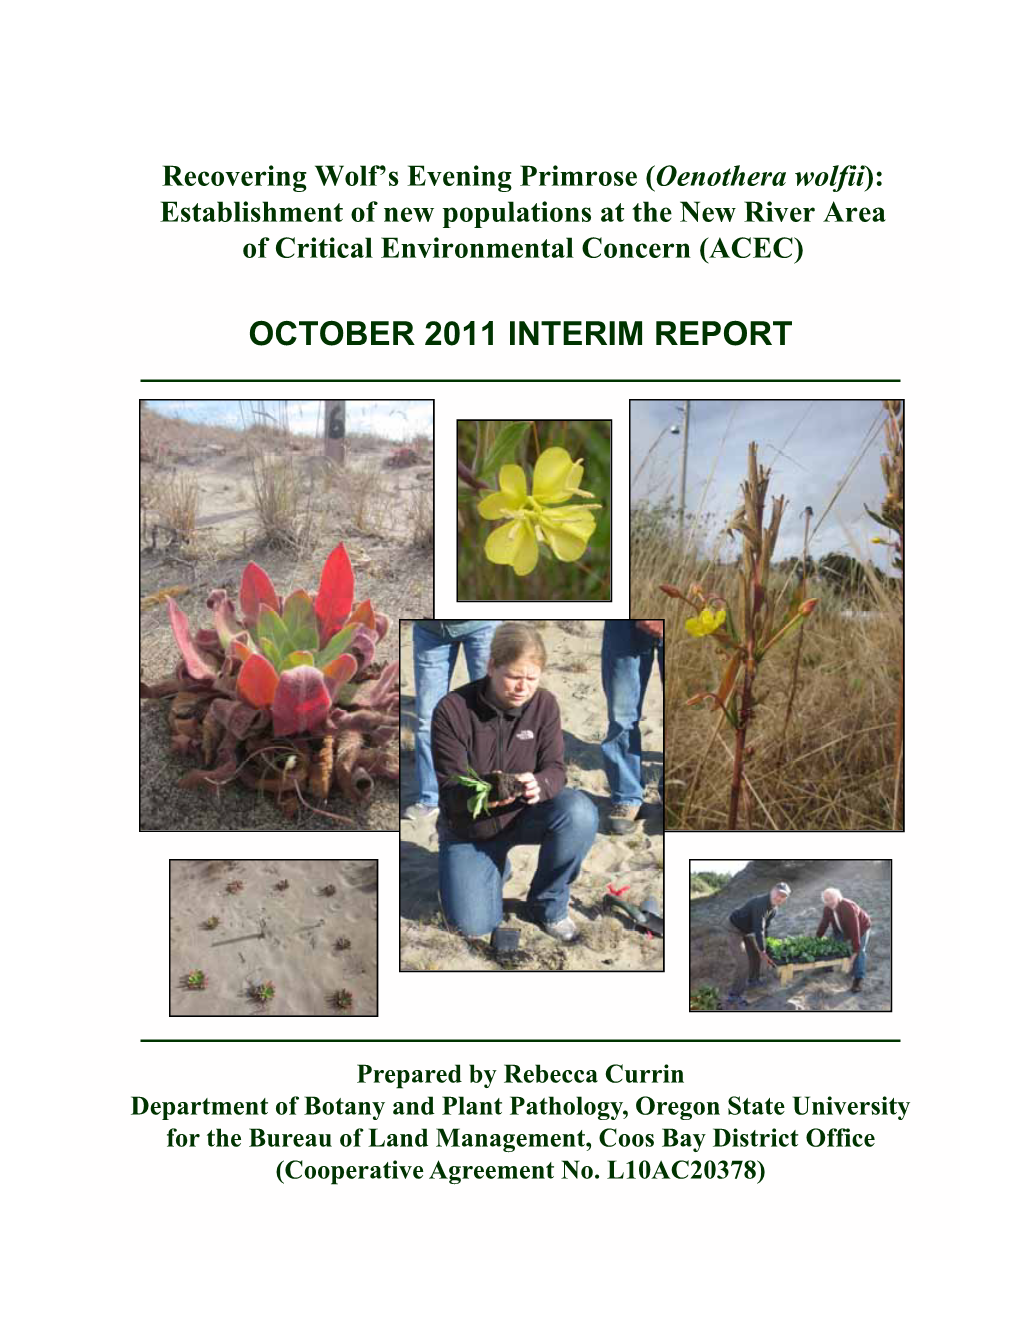 October 2011 Interim Report